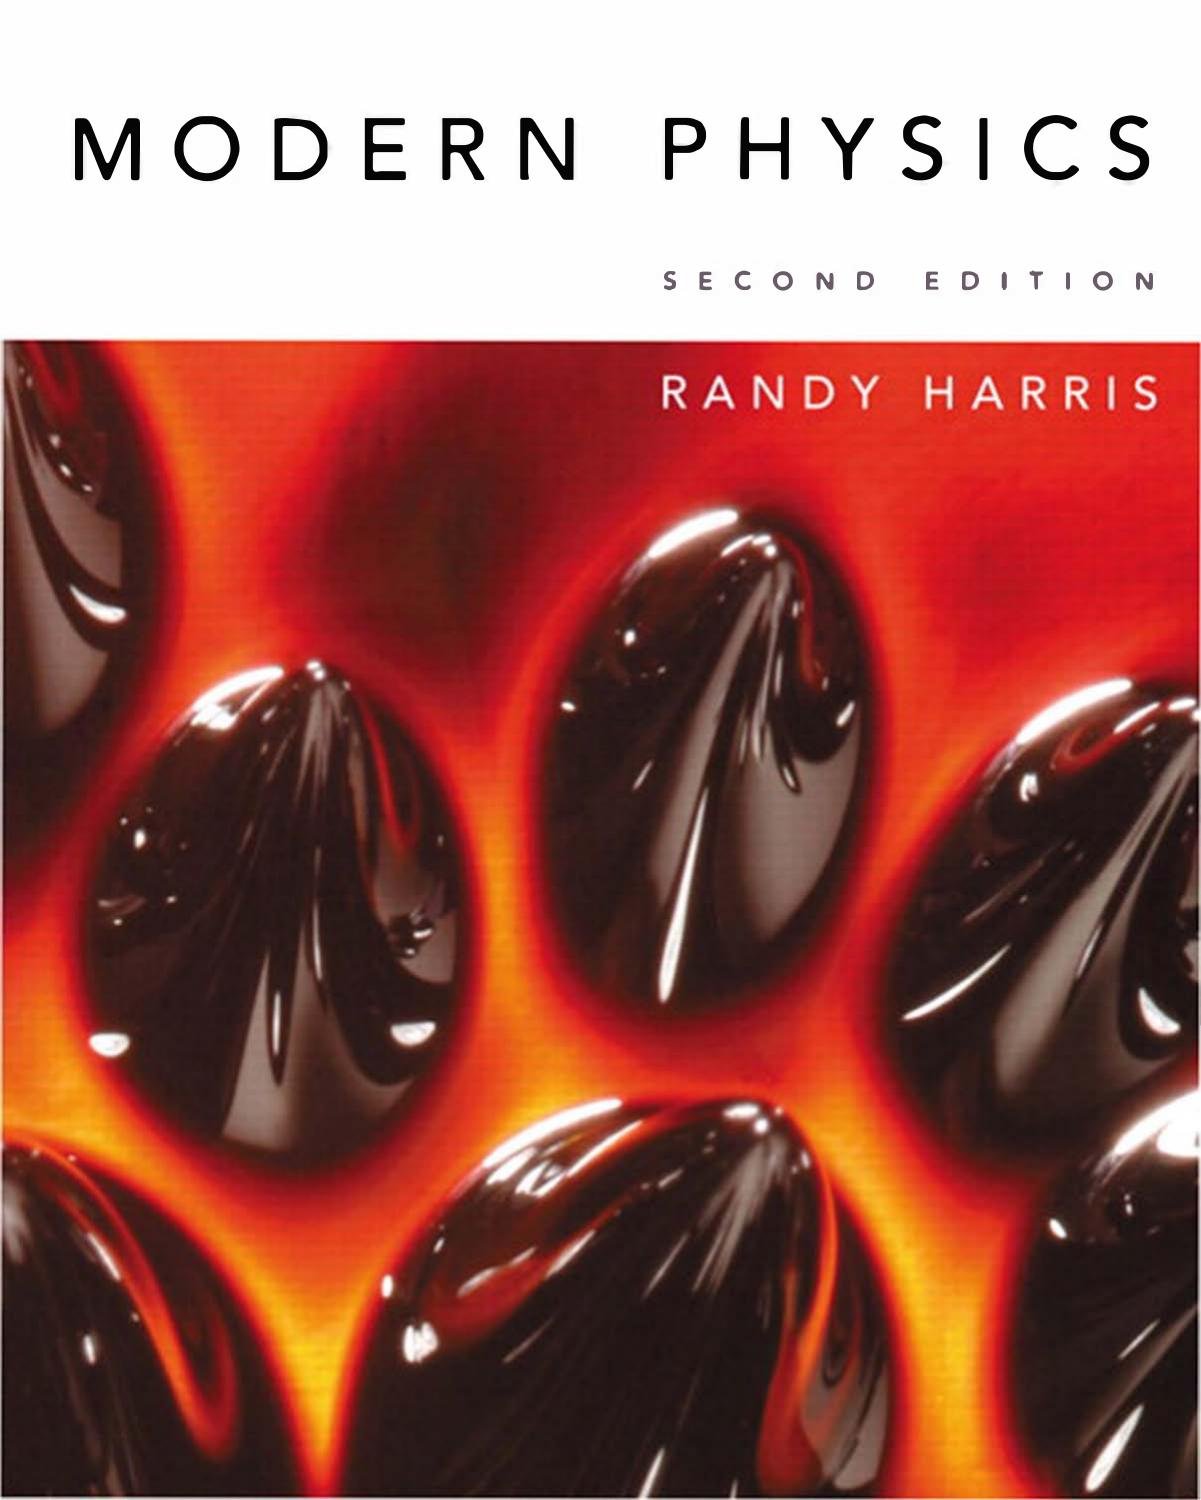 Modern Physics 2nd Edition by Randy Harris.jpg